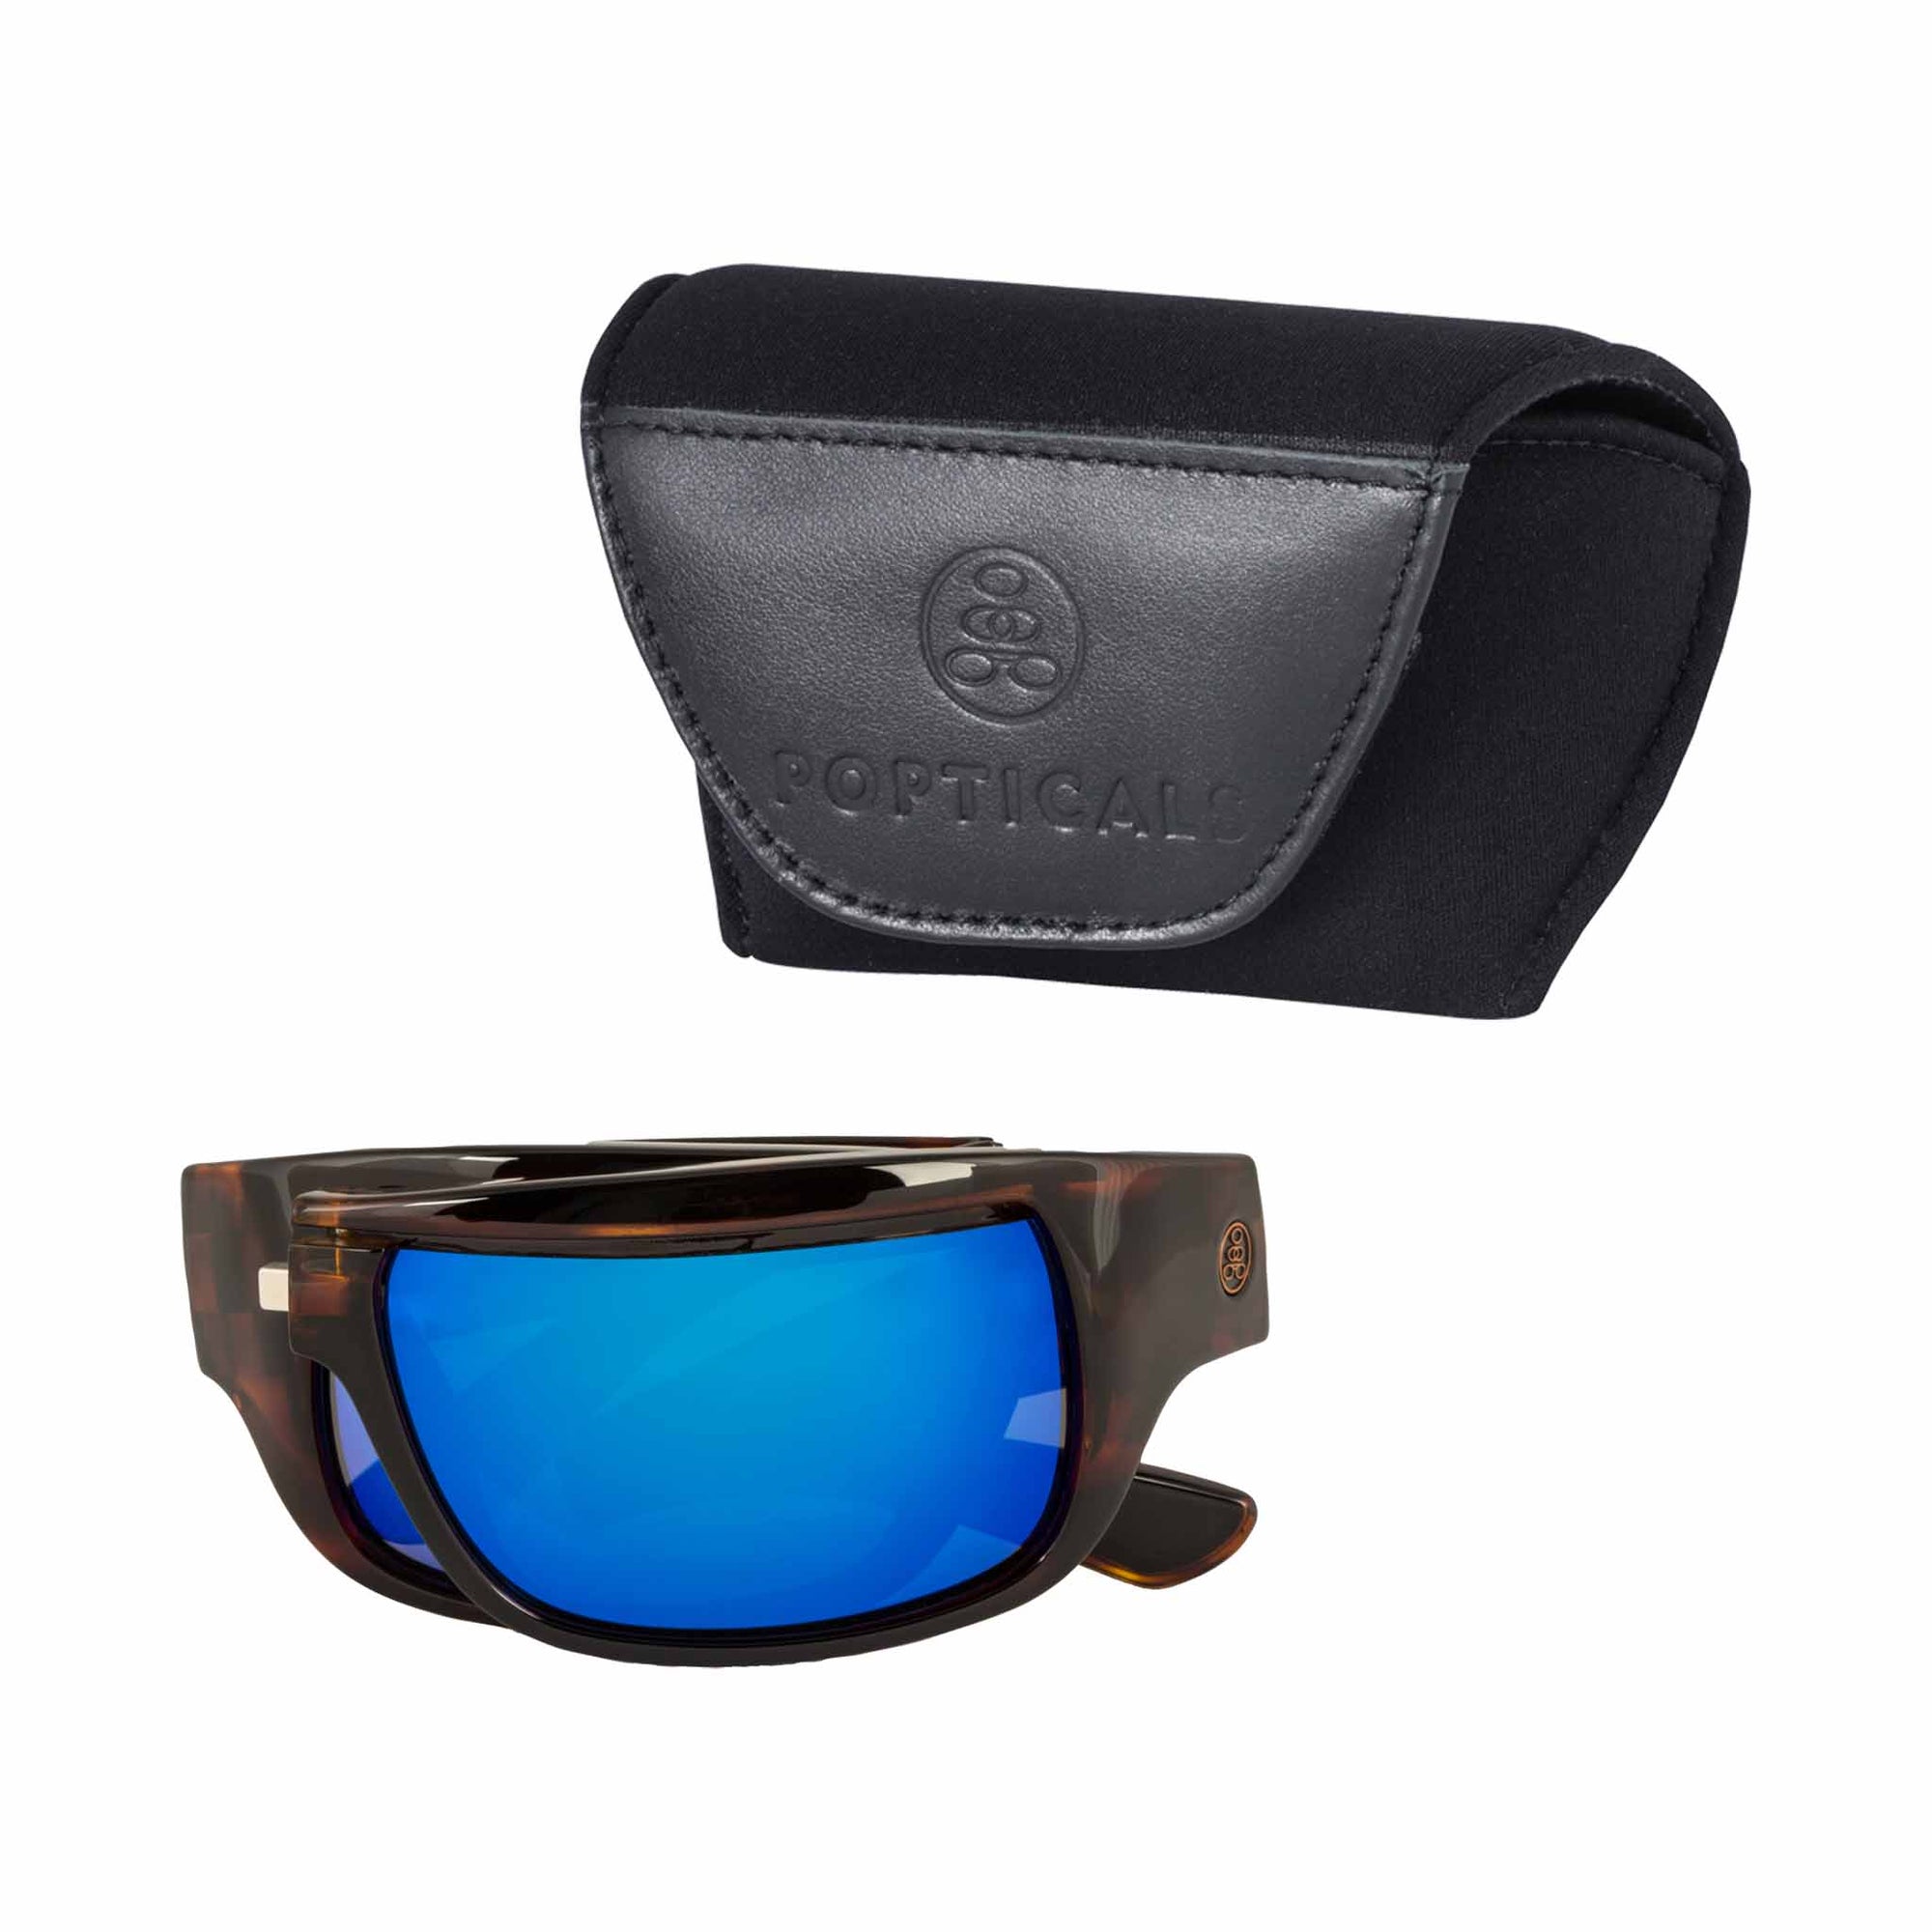 Popticals, Premium Compact Sunglasses, PopH2O, 010070-CTUN, Polarized Sunglasses, Gloss Tortoise Frame, Gray Lenses w/Blue Mirror Finish, Case View